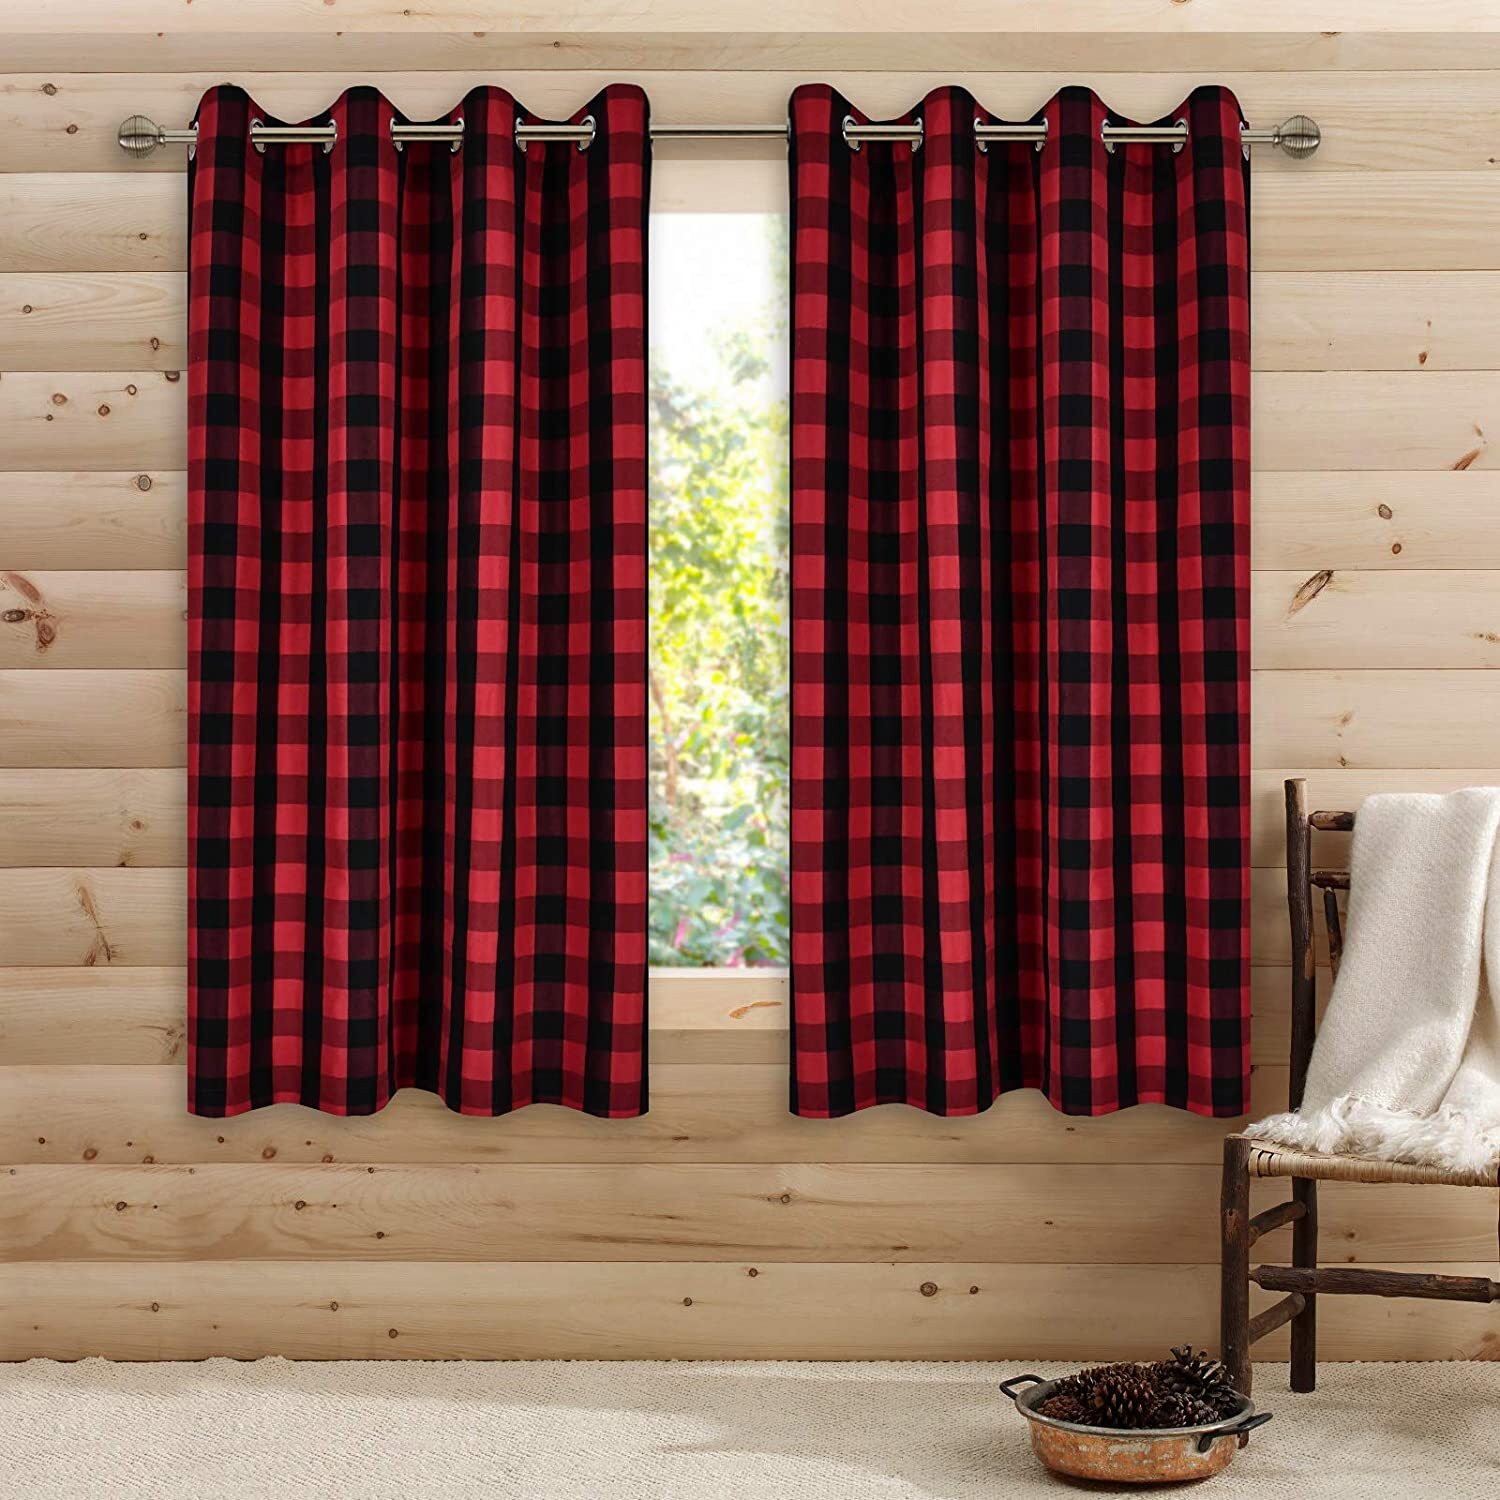 Shorter plaid curtains